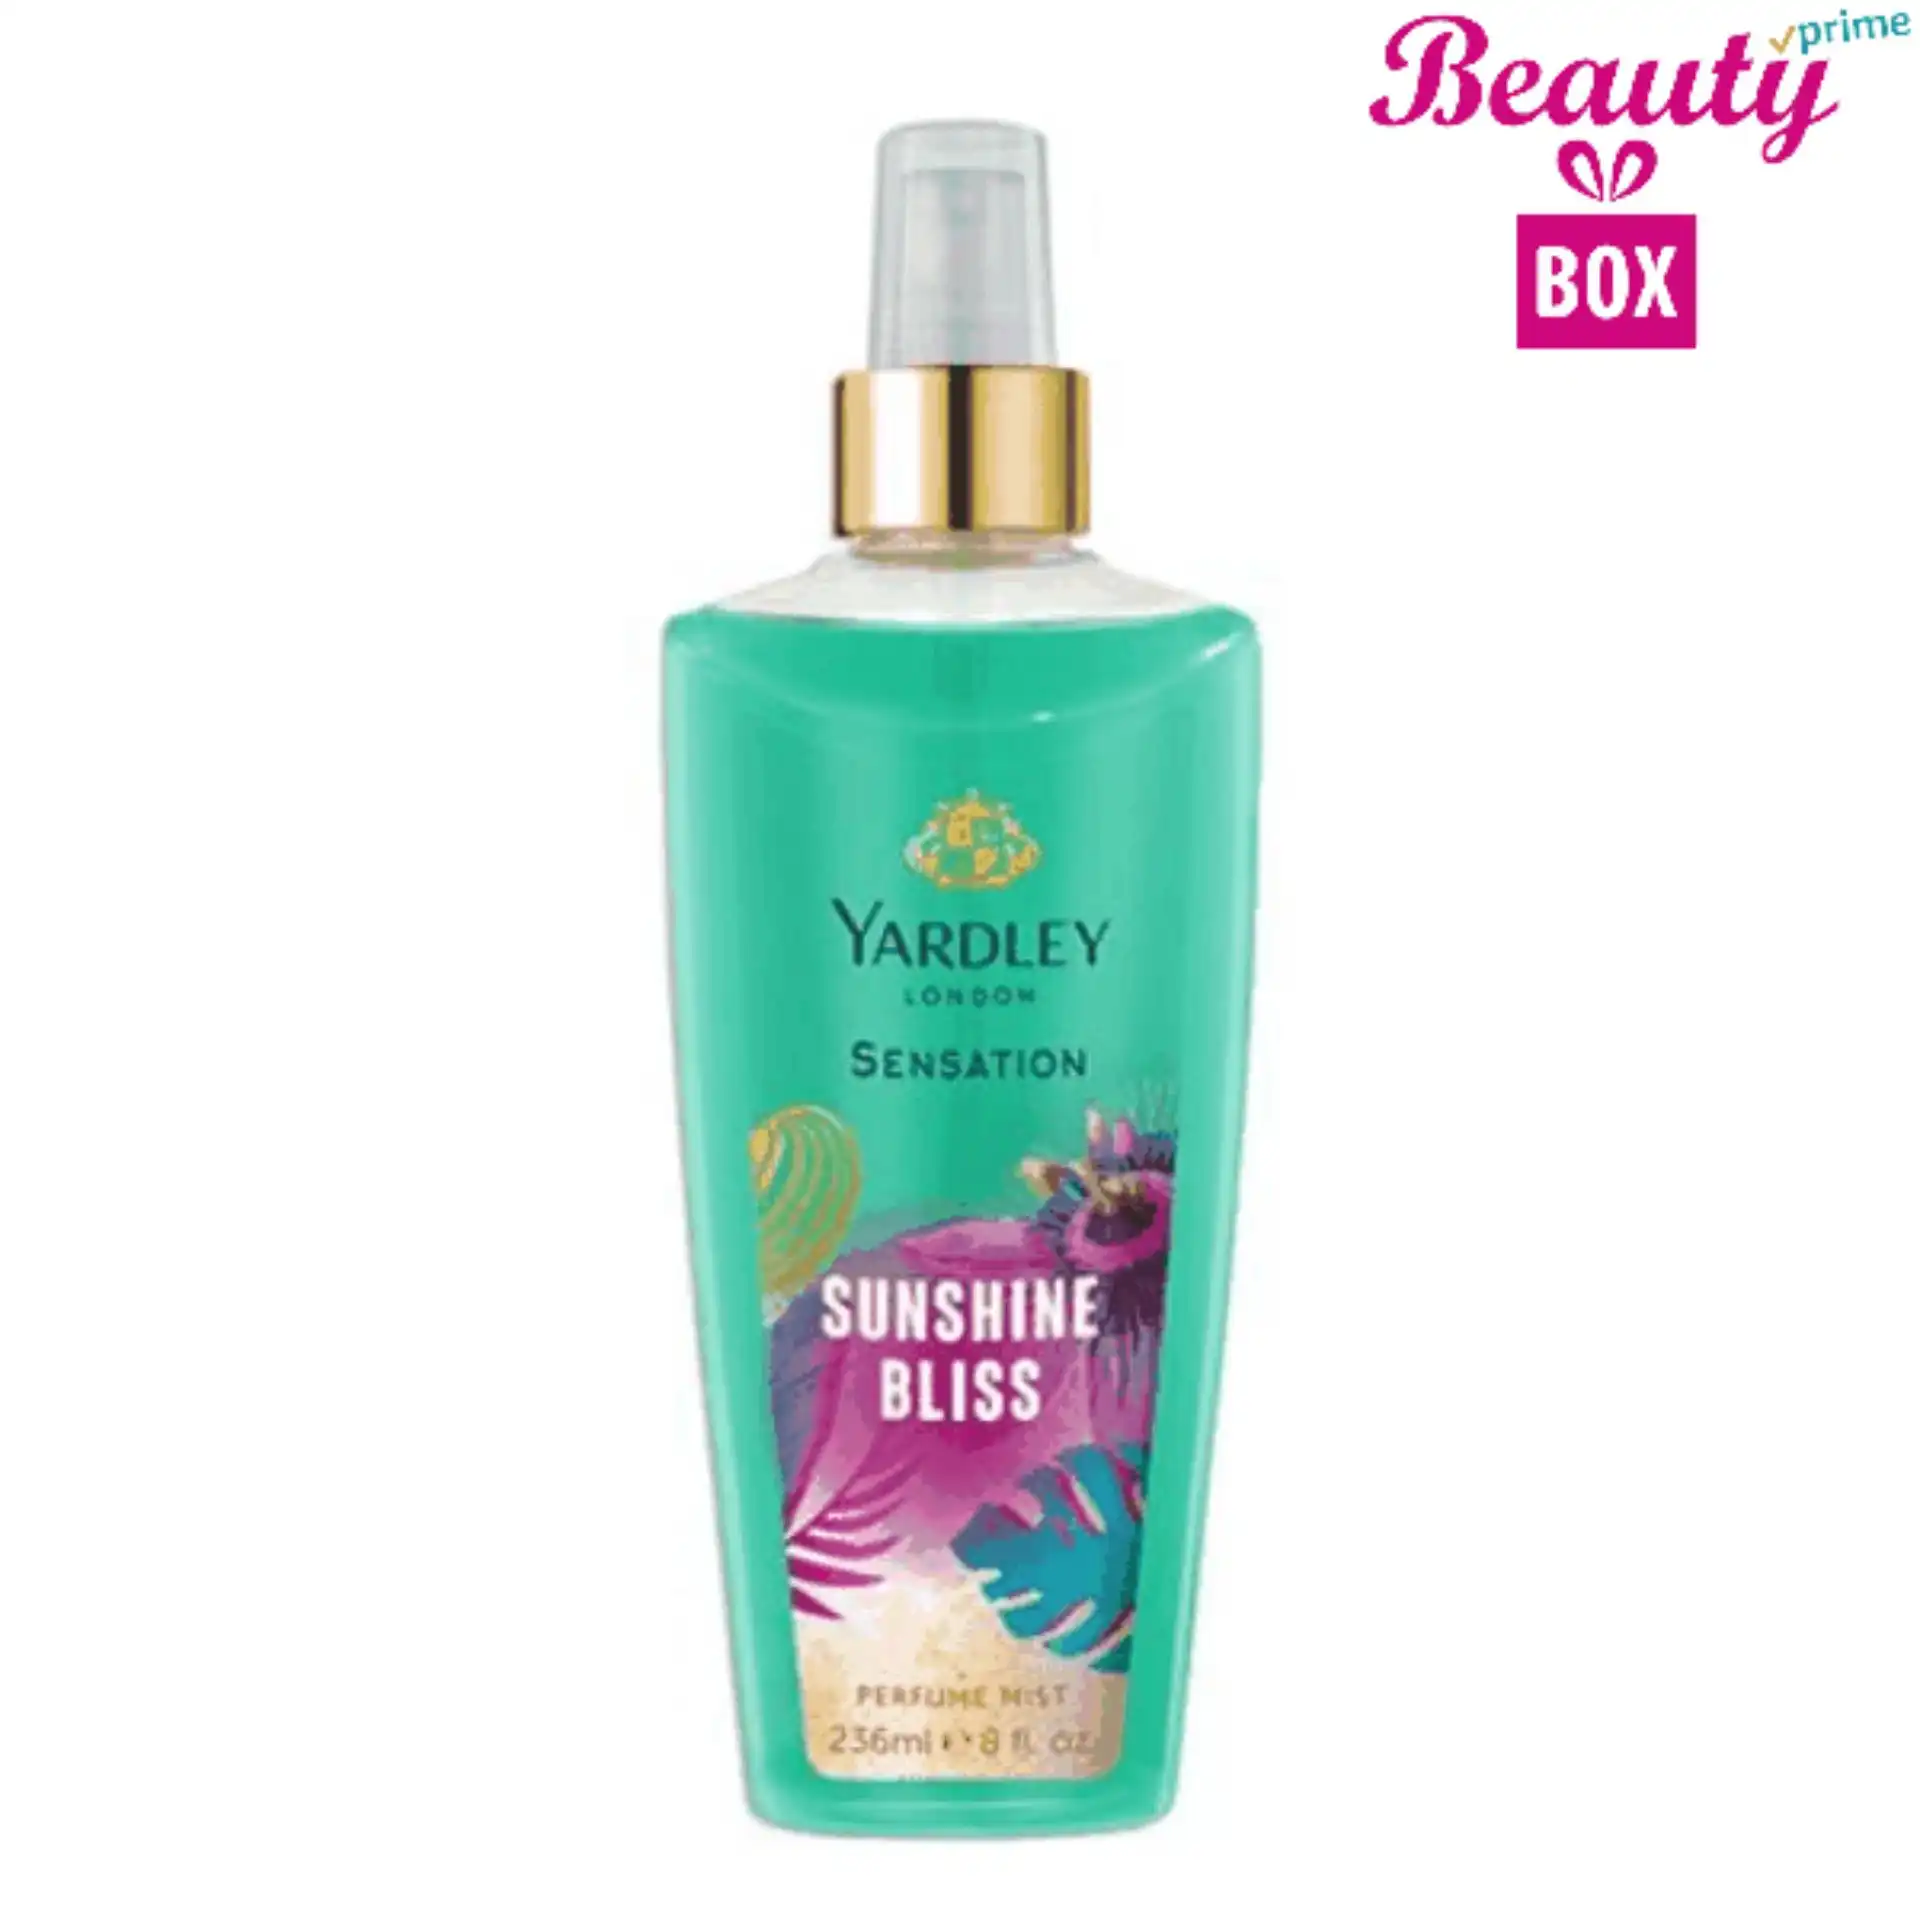 Yardley Sunshine Bliss Perfume Mist - 236 Ml